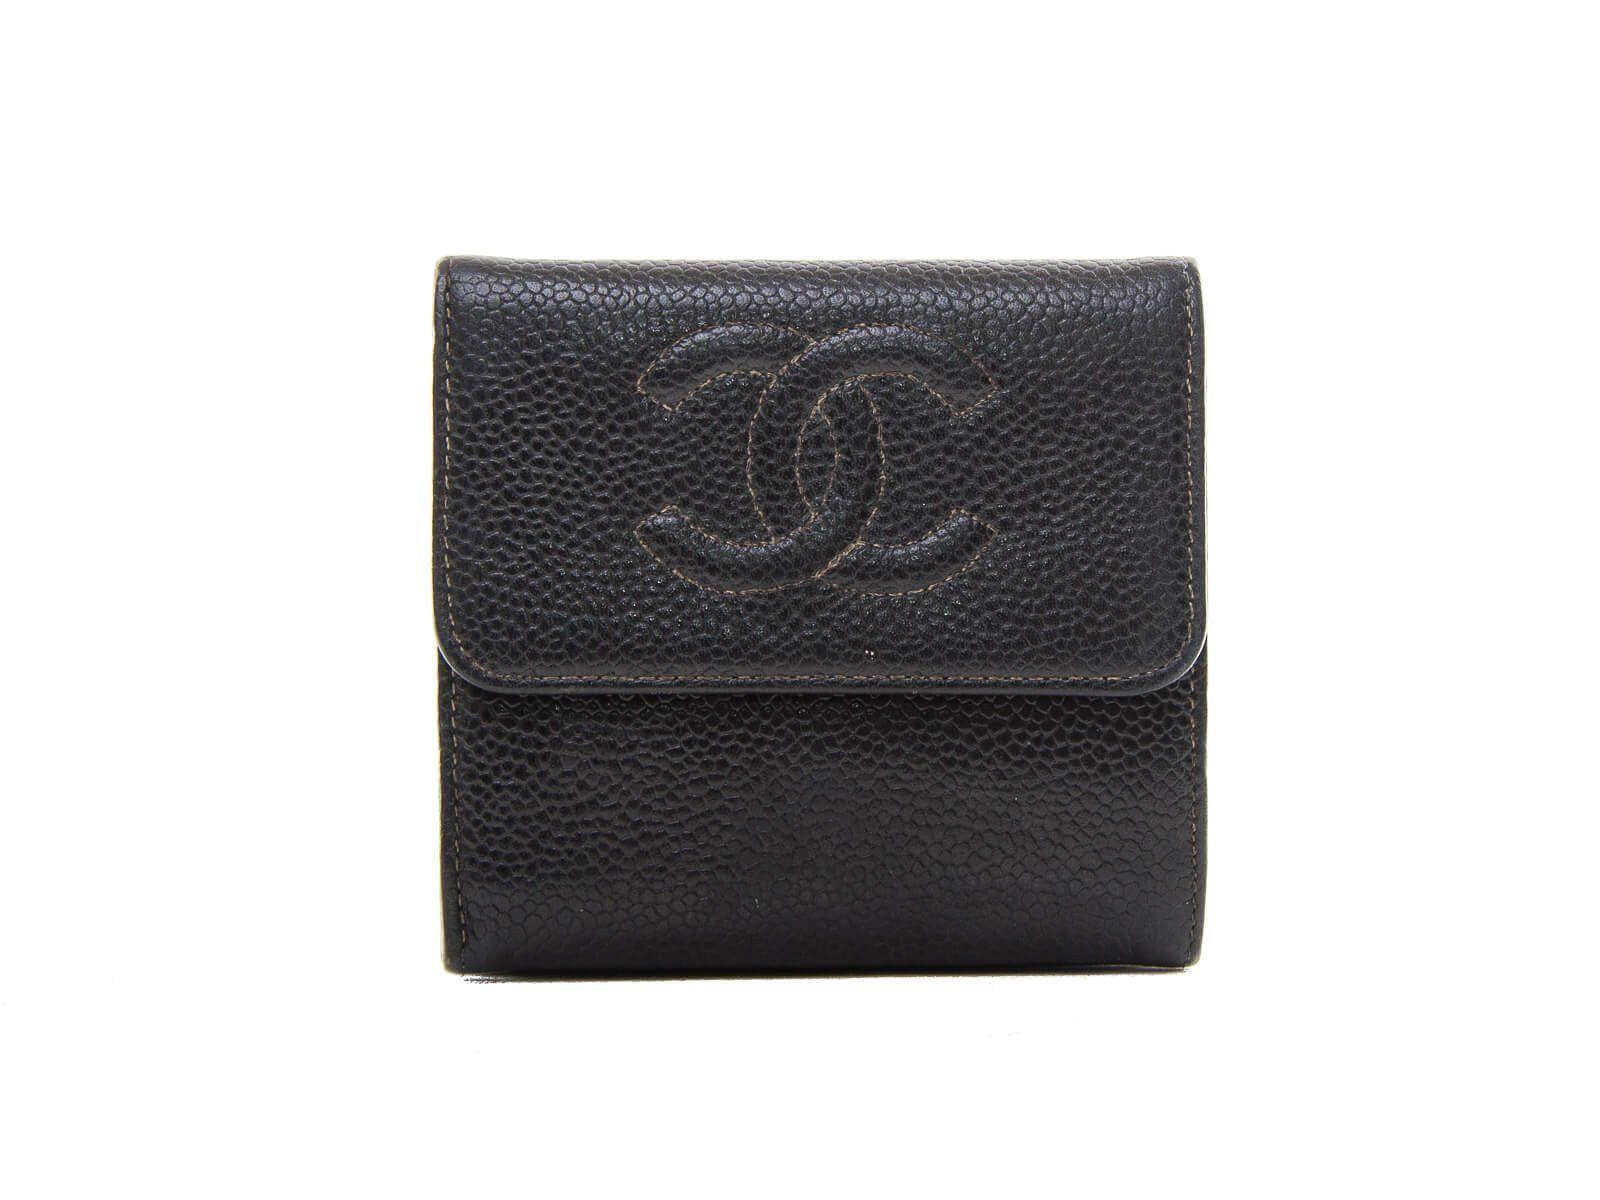 Chanel CC Logo - Authentic Chanel CC logo Black caviar leather tri-fold wallet ...